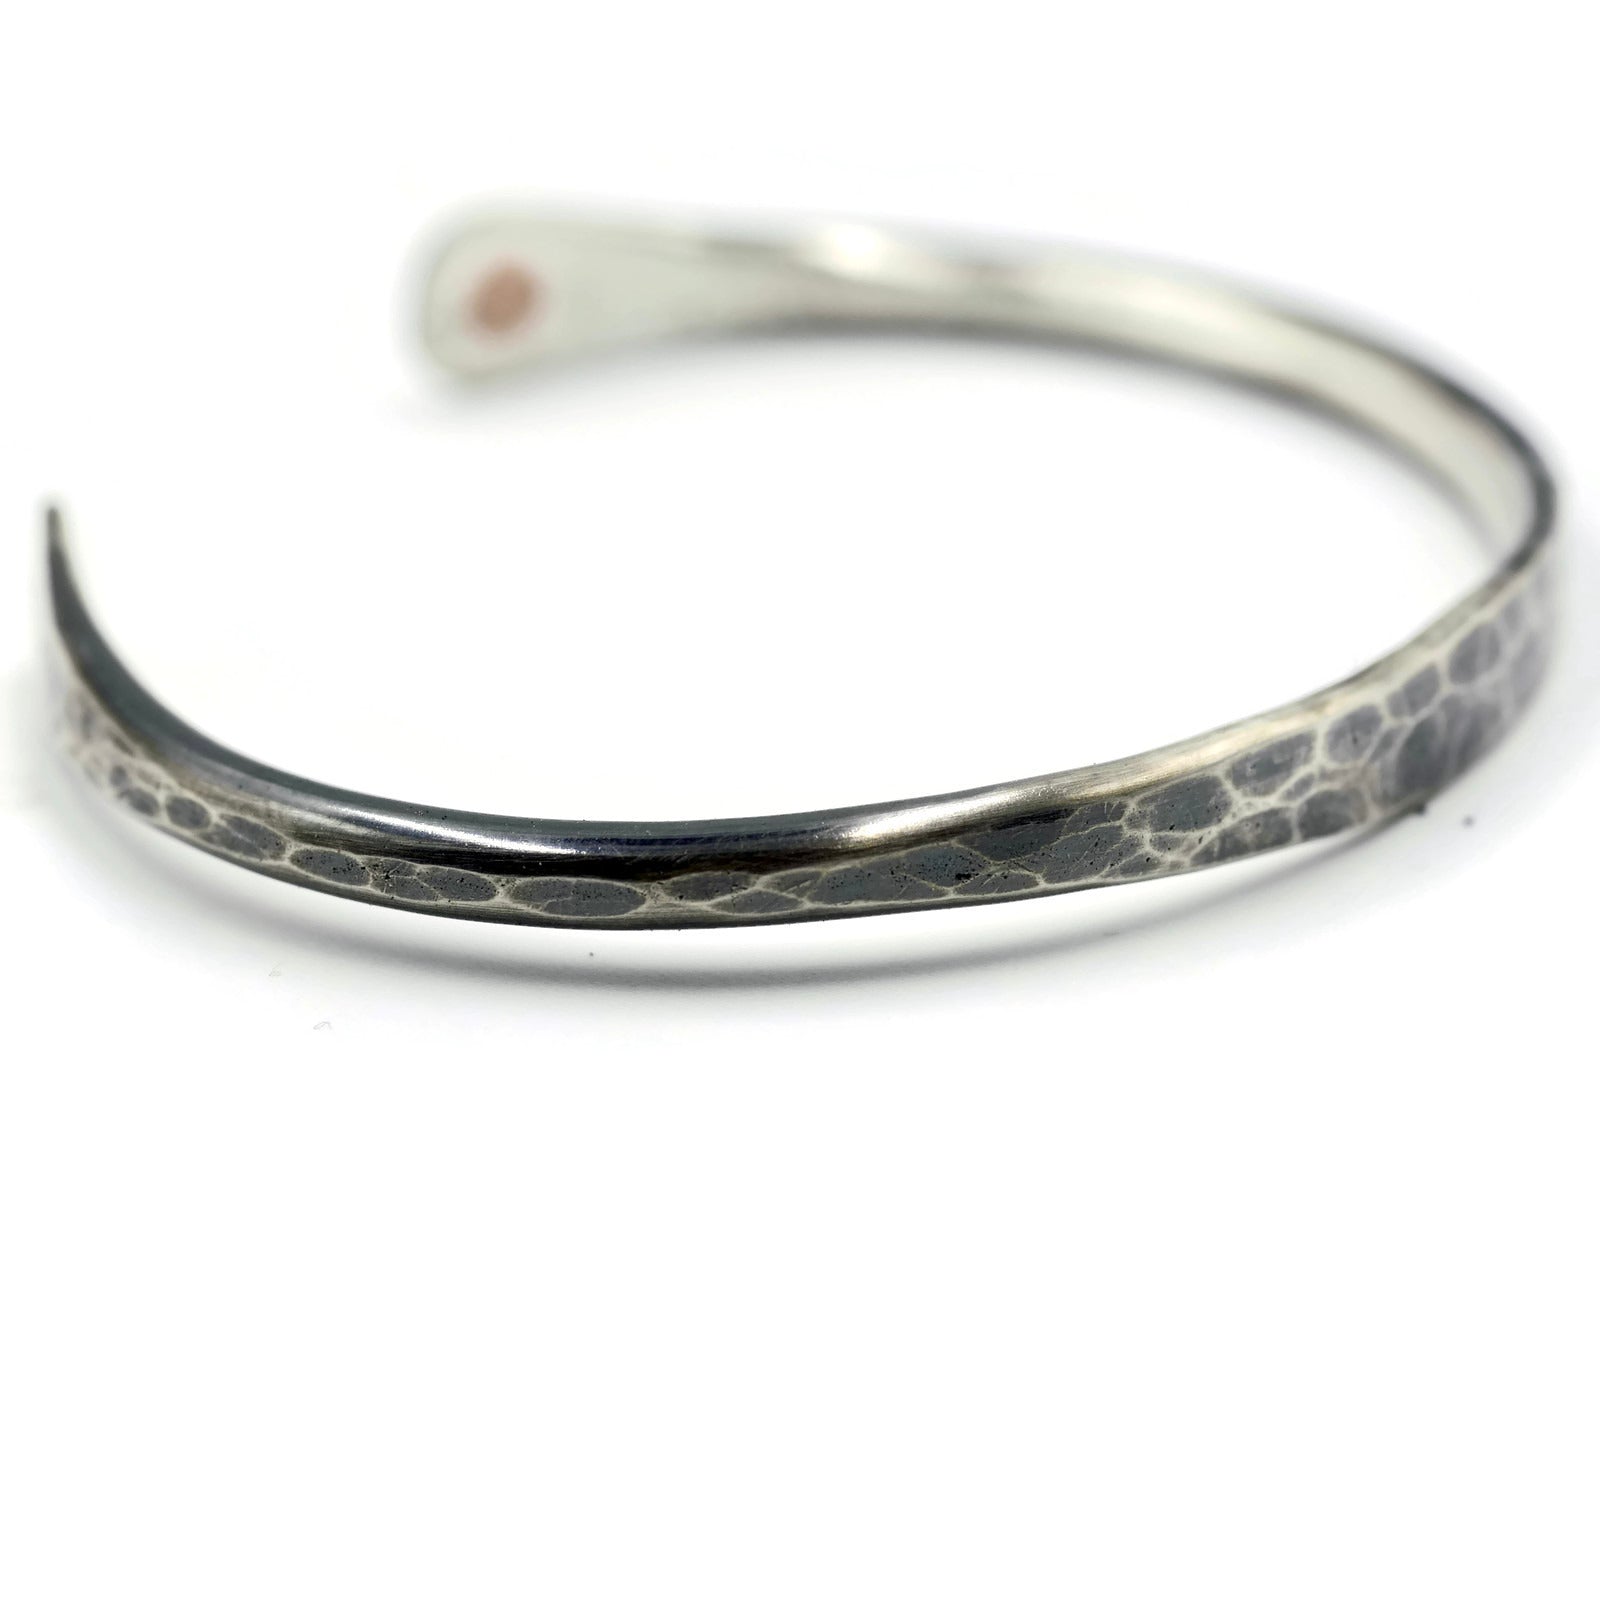 Hammered Sterling Silver Cuff Bracelet for Men or Women – Pat